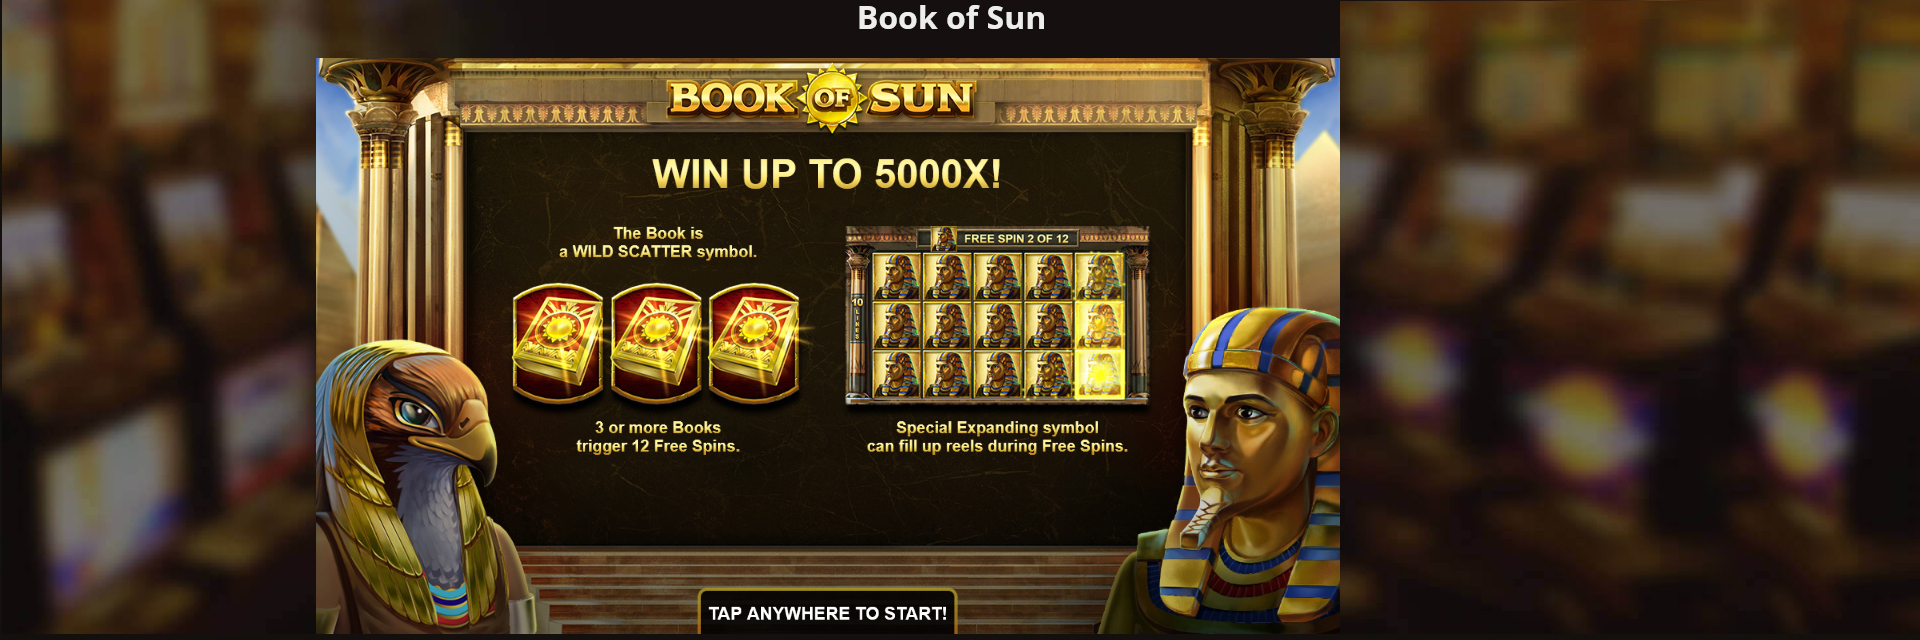 Book of sun slot.